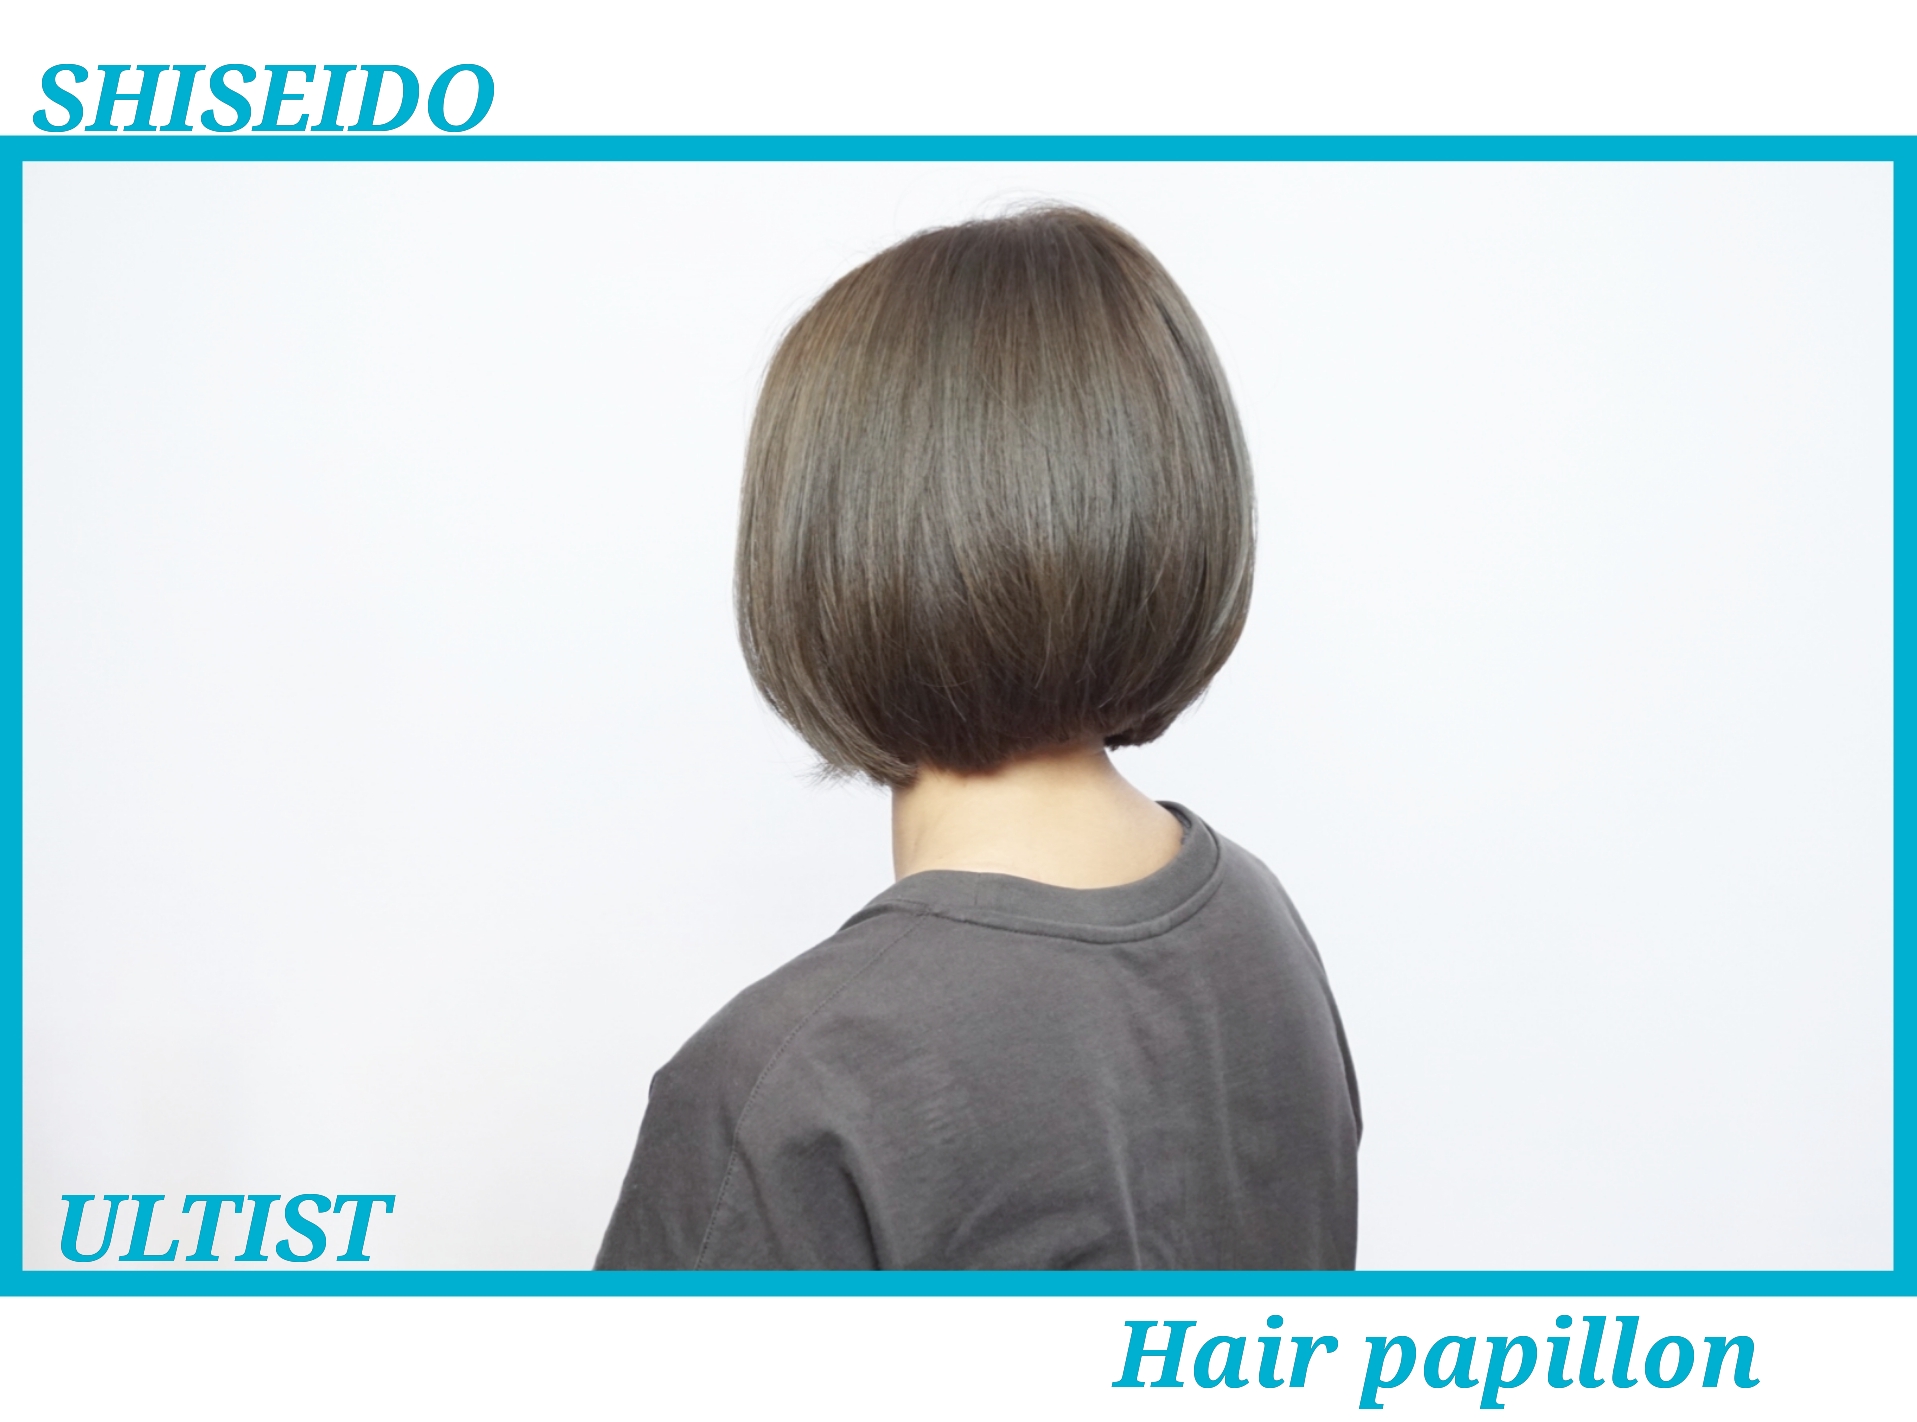 髮型作品參考:shiseido ultist